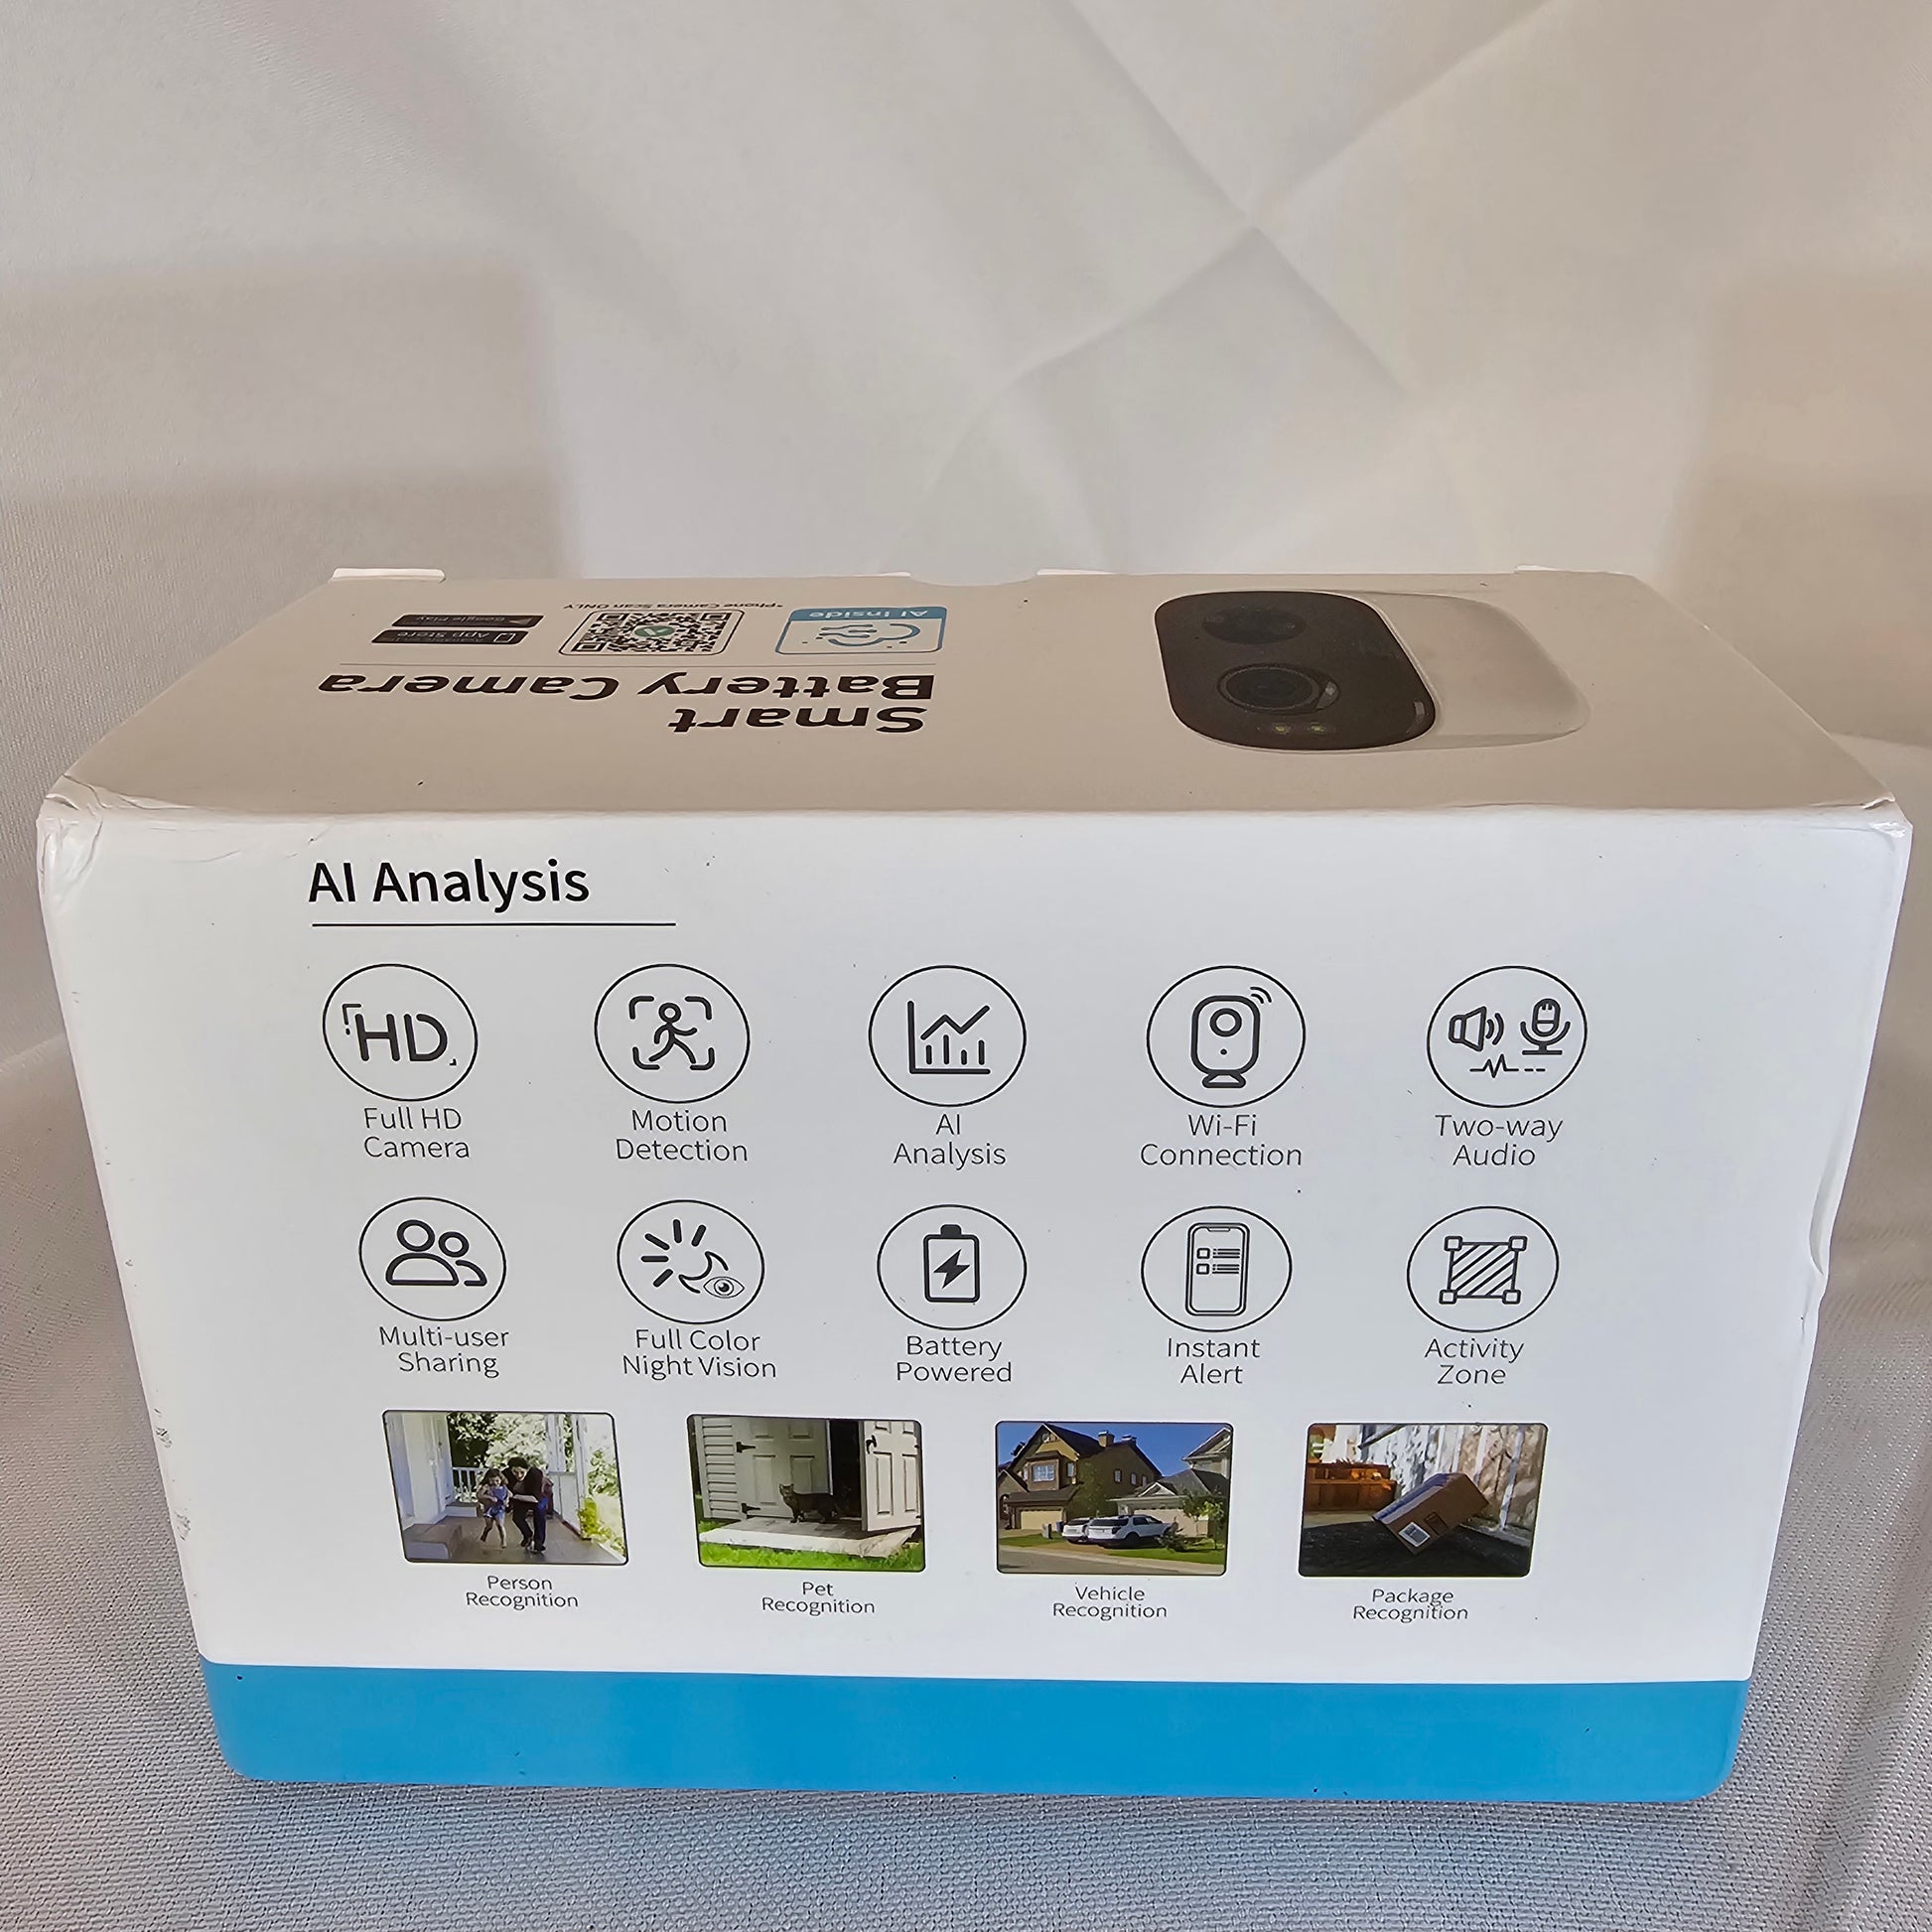 Smart Battery Camera - DQ Distribution